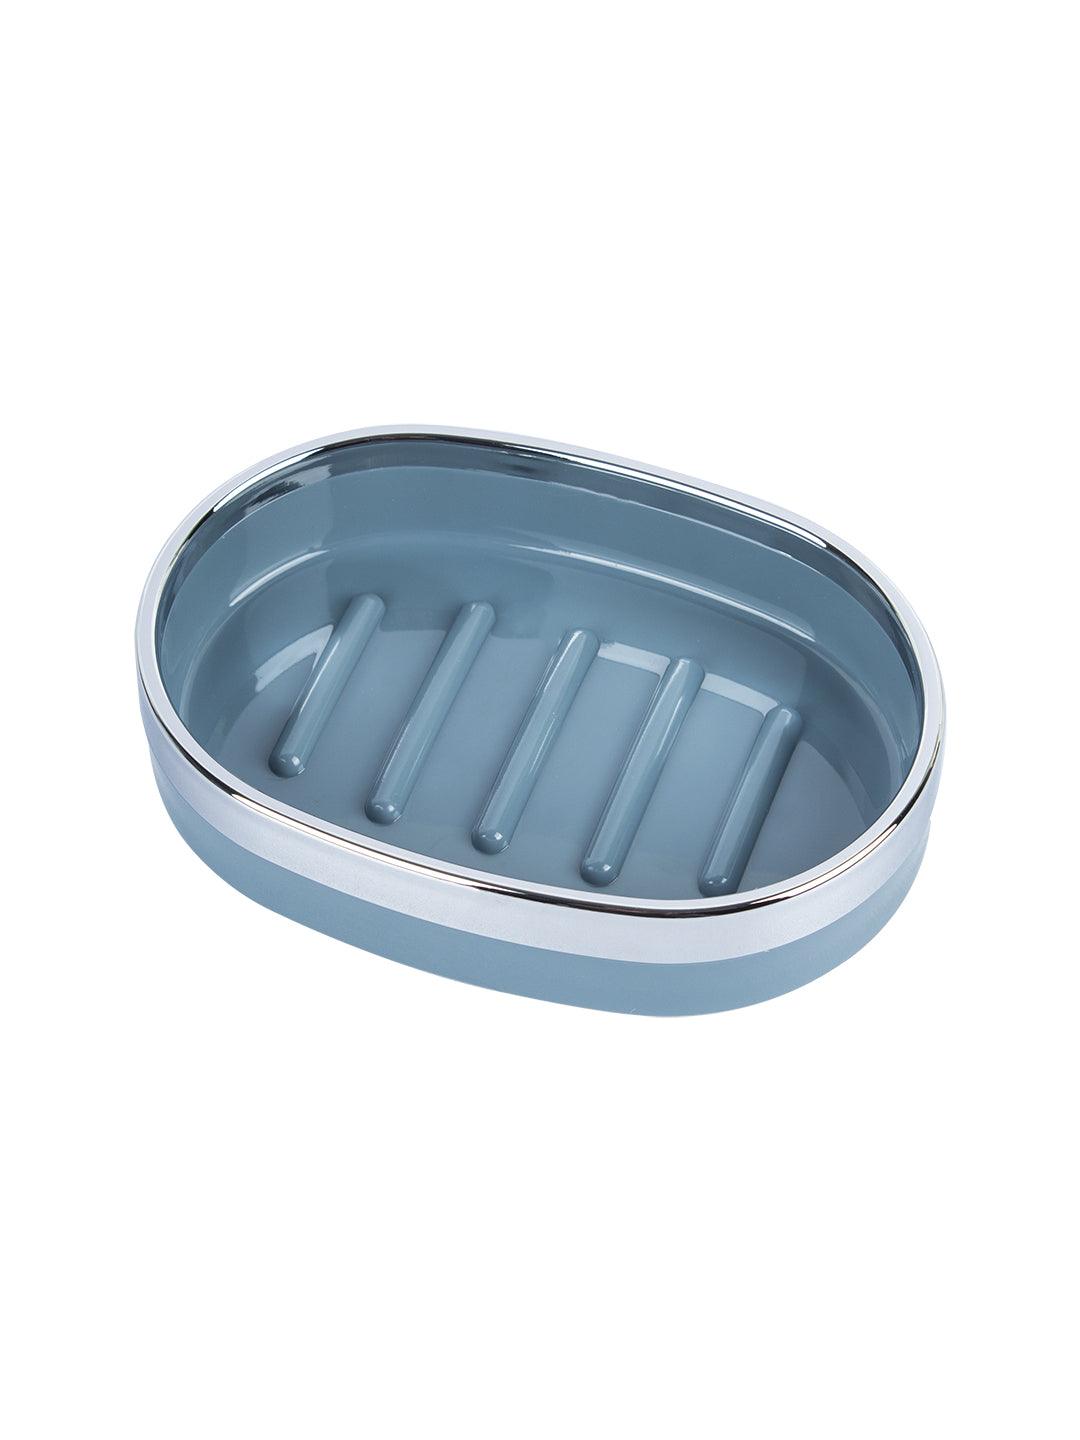 Market99 Oval Soap Dish Holder | Soap Dish | Soap Holder - MARKET 99